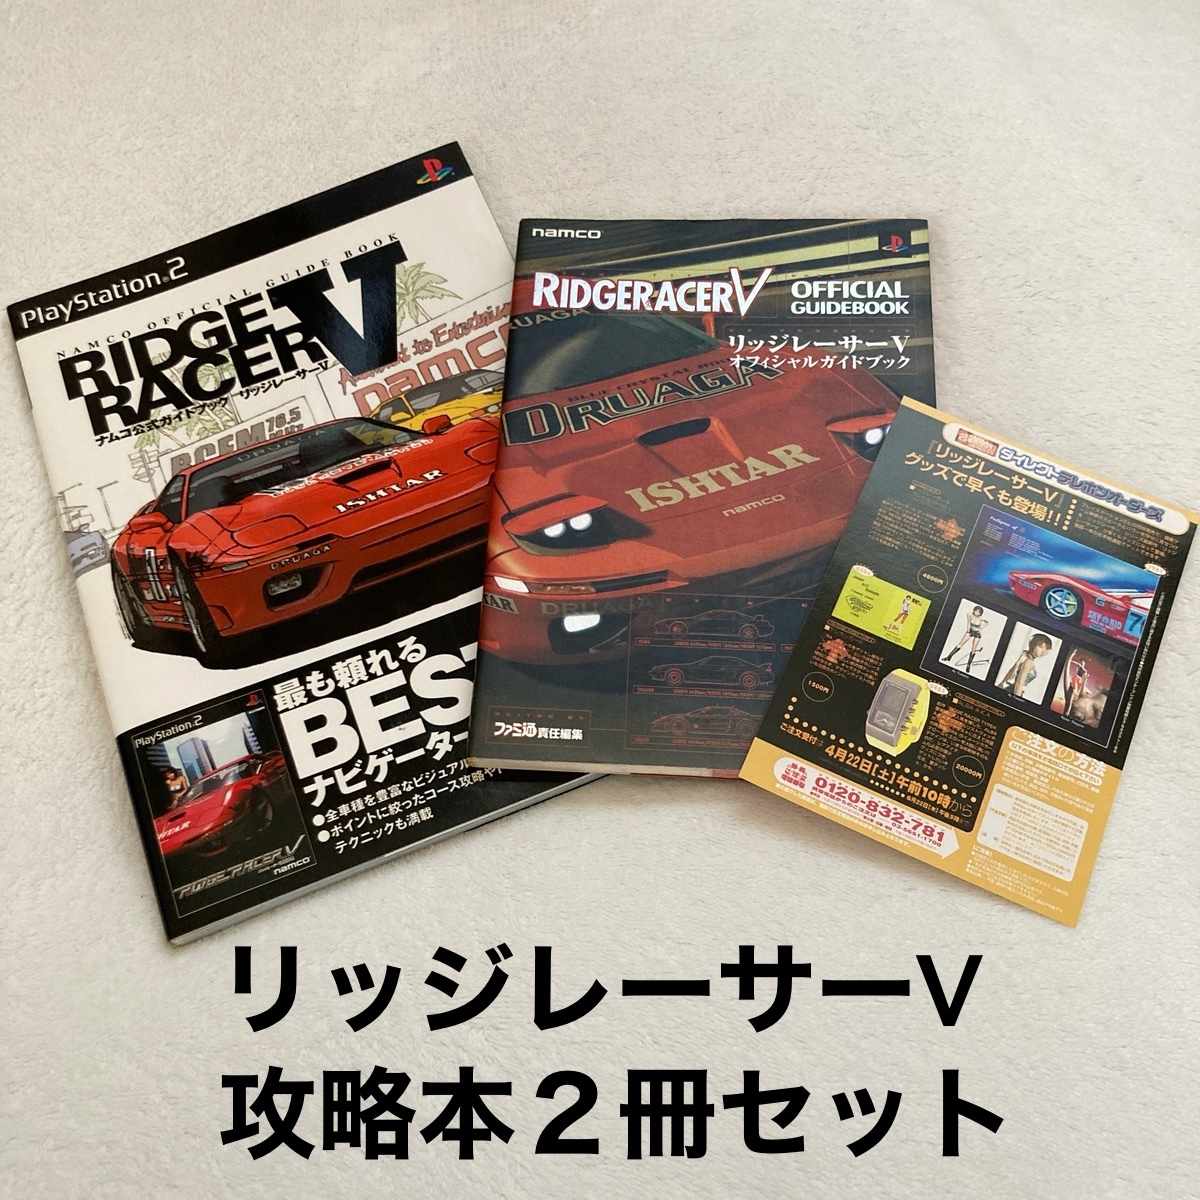  Ridge Racer V ( Ridge Racer five ) capture book 2 pcs. / Namco official guidebook & official guidebook / Ridge Racer 5 PS2